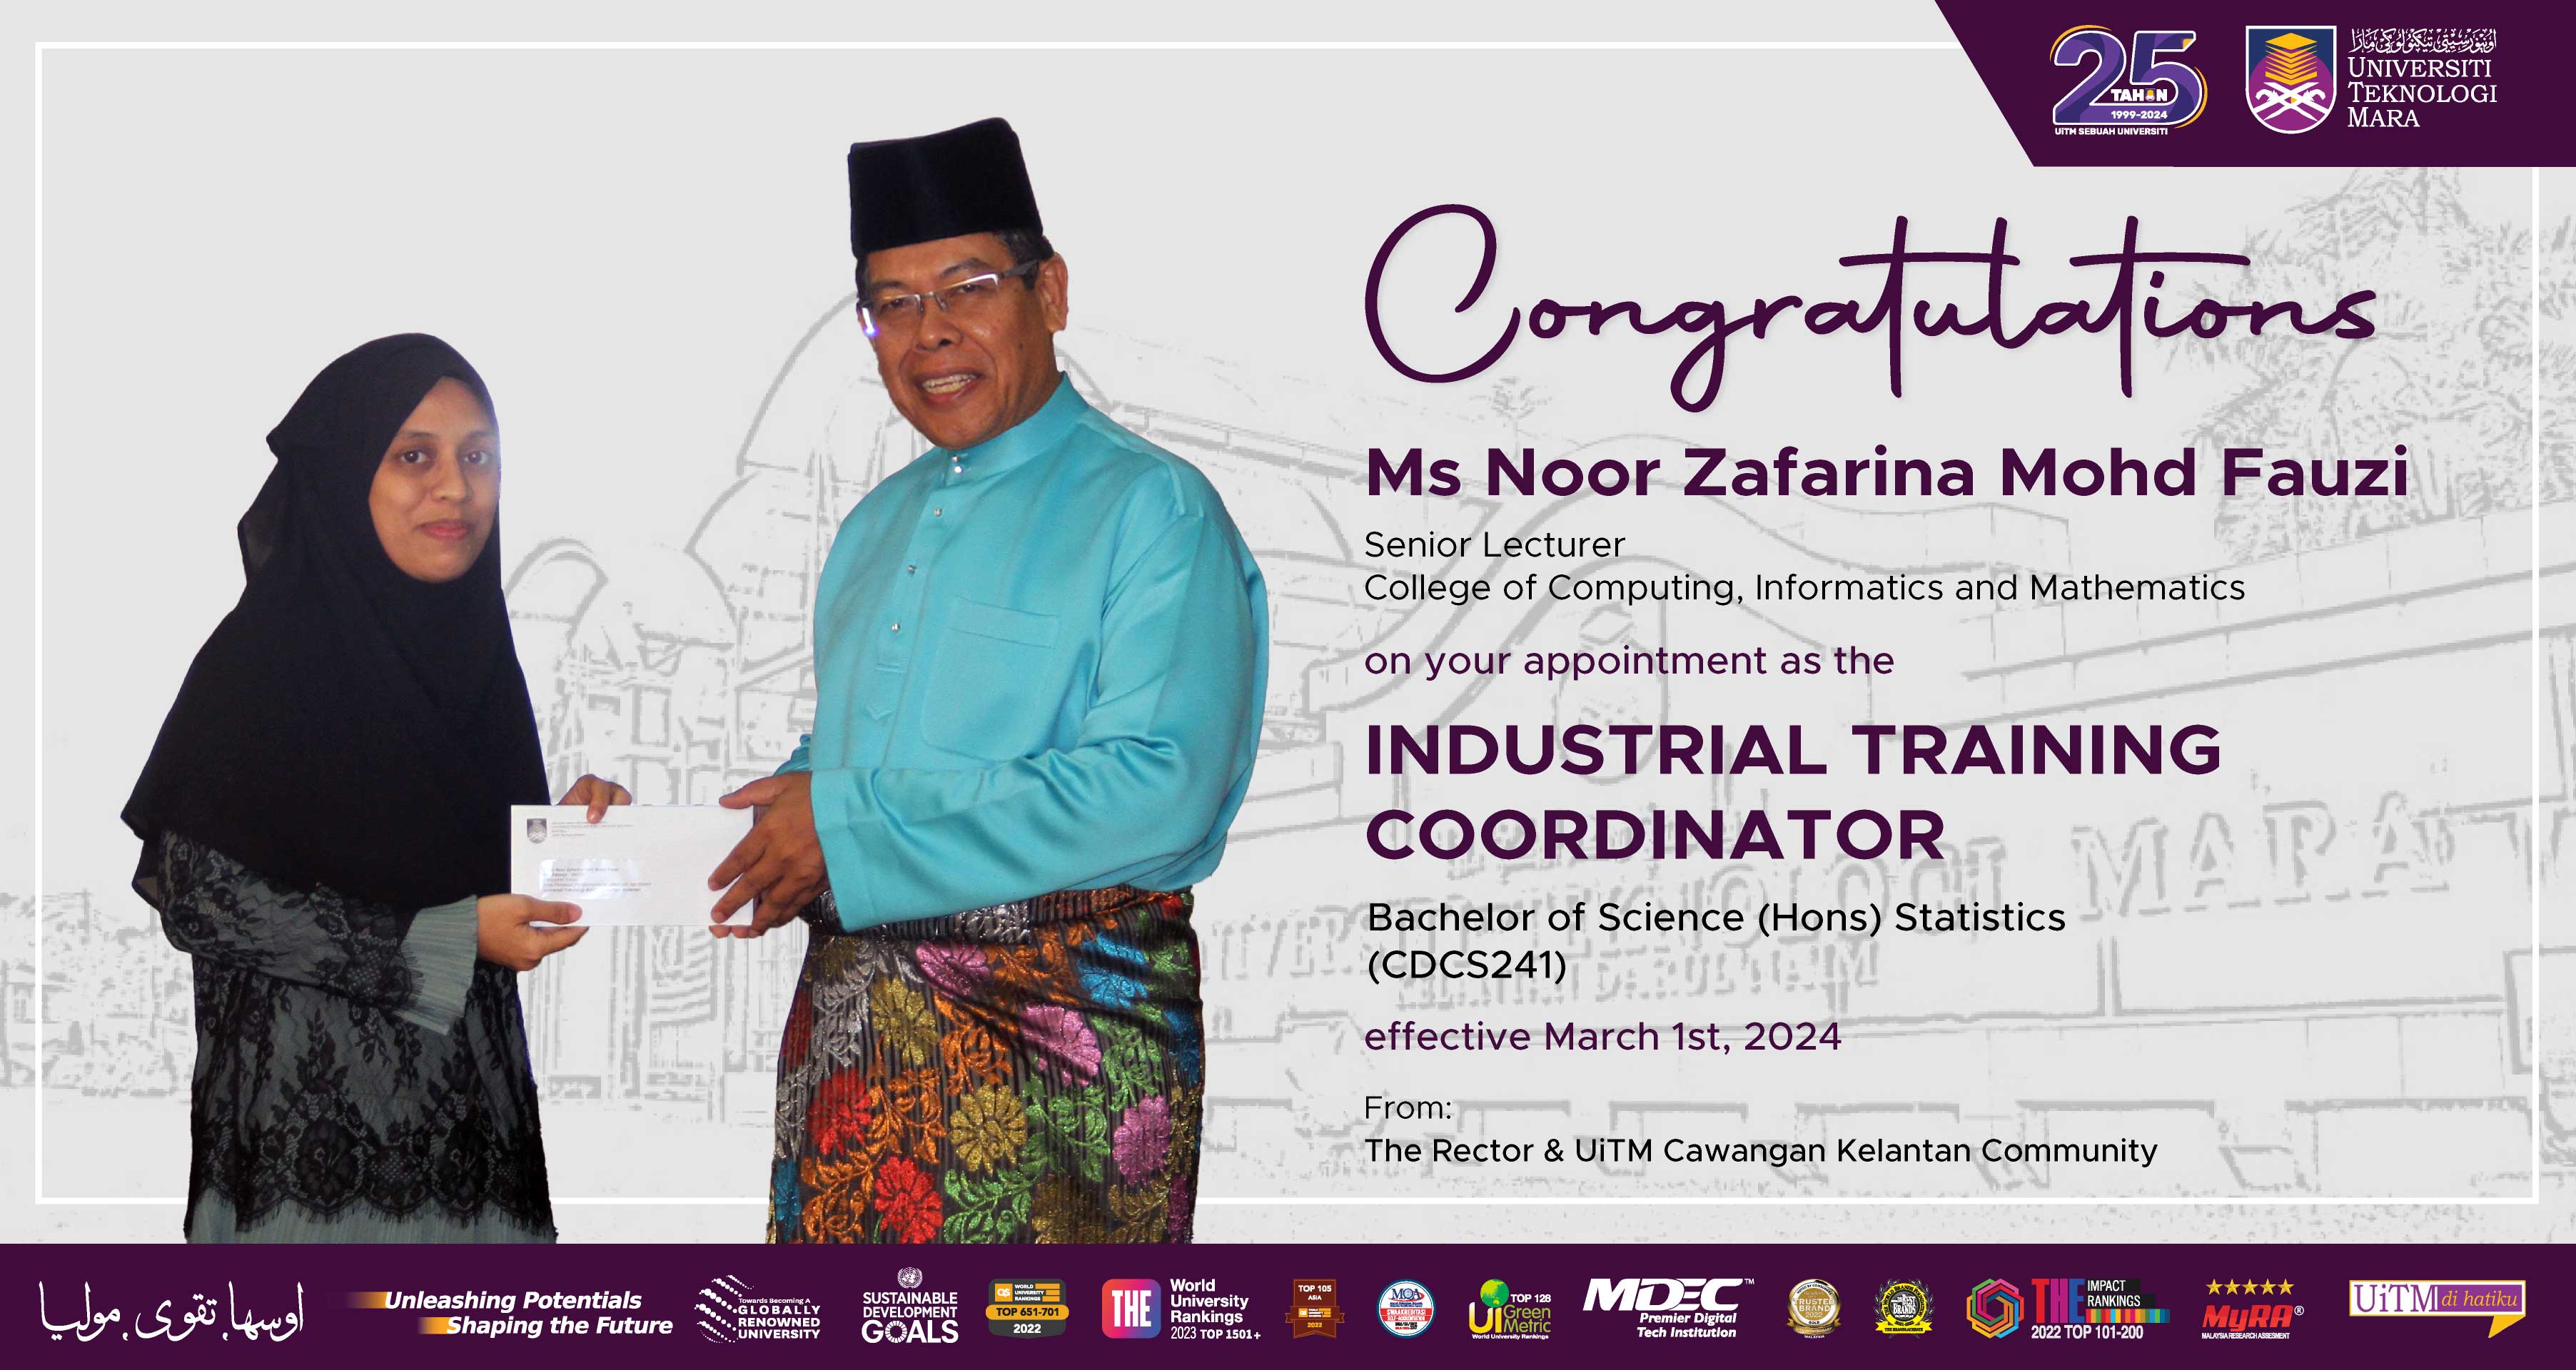 Congratulations!!! Ms Noor Zafarina Mohd Fauzi, Industrial Training Coordinator of Bachelor of Science (Hons) Statistics (CDCS241)